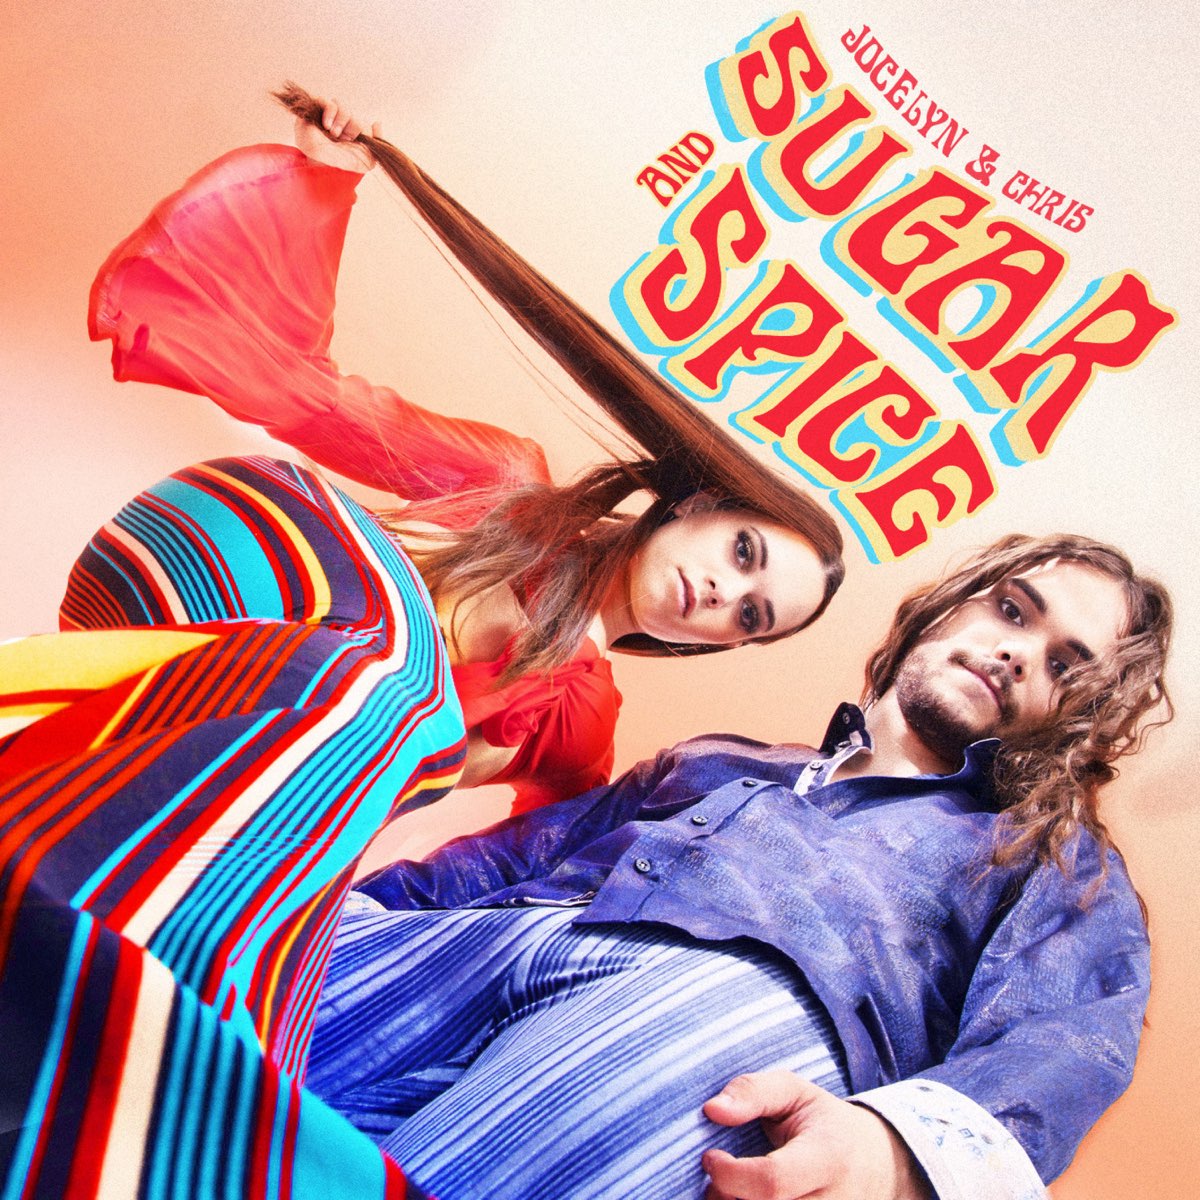 Sugar ремиксы песни. Jocelyn & Chris Arndt. Sugar песня. Chacha and the Monsters альбом Sugar & Spice 2013 список песен.